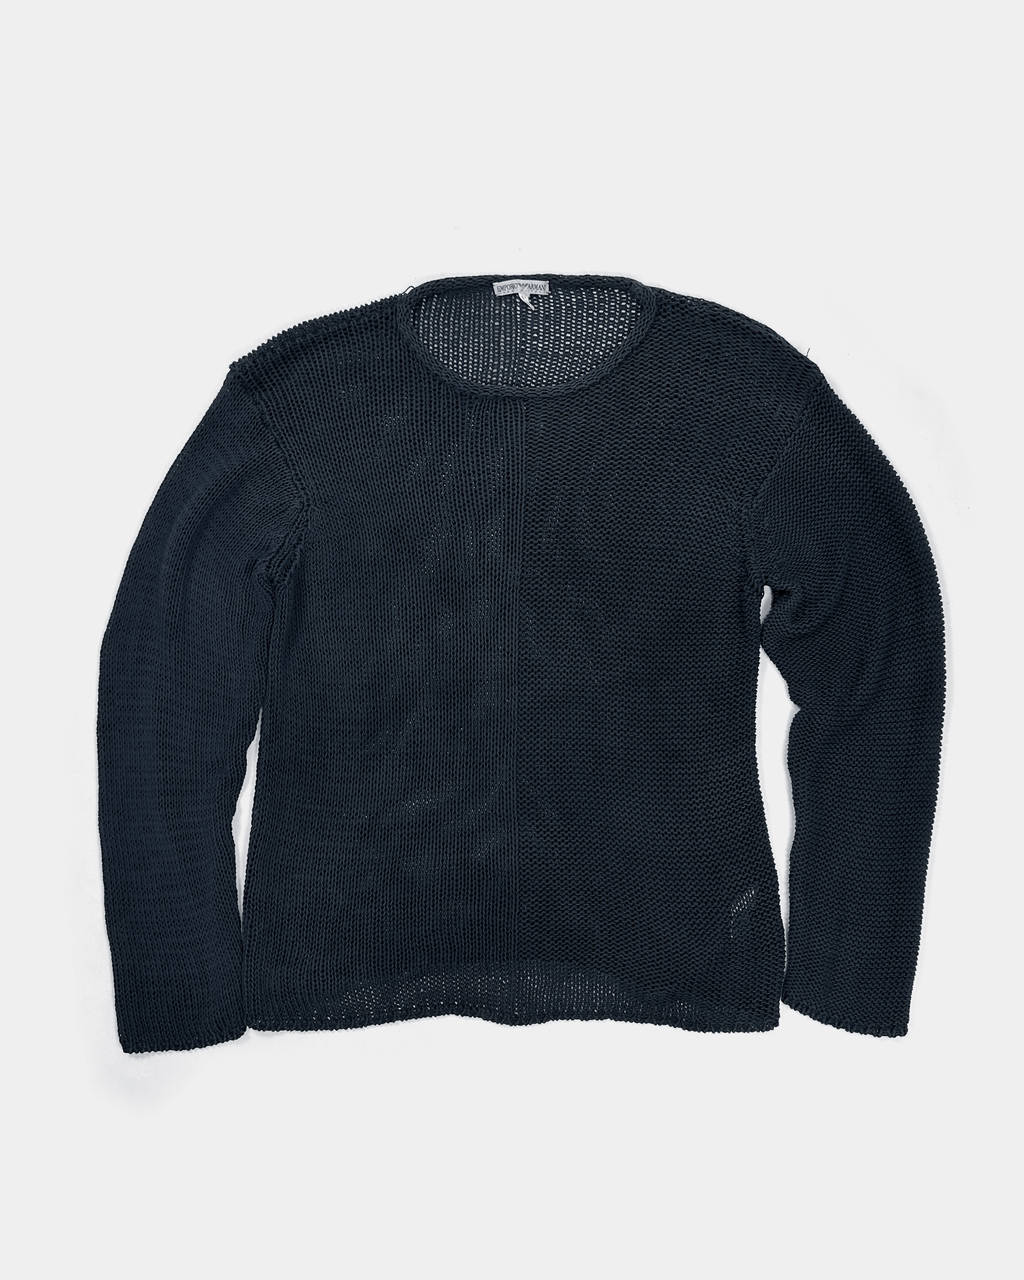 Armani Heavyweight Deep Blue Knitted Sweater 2000's – Vintage TTS